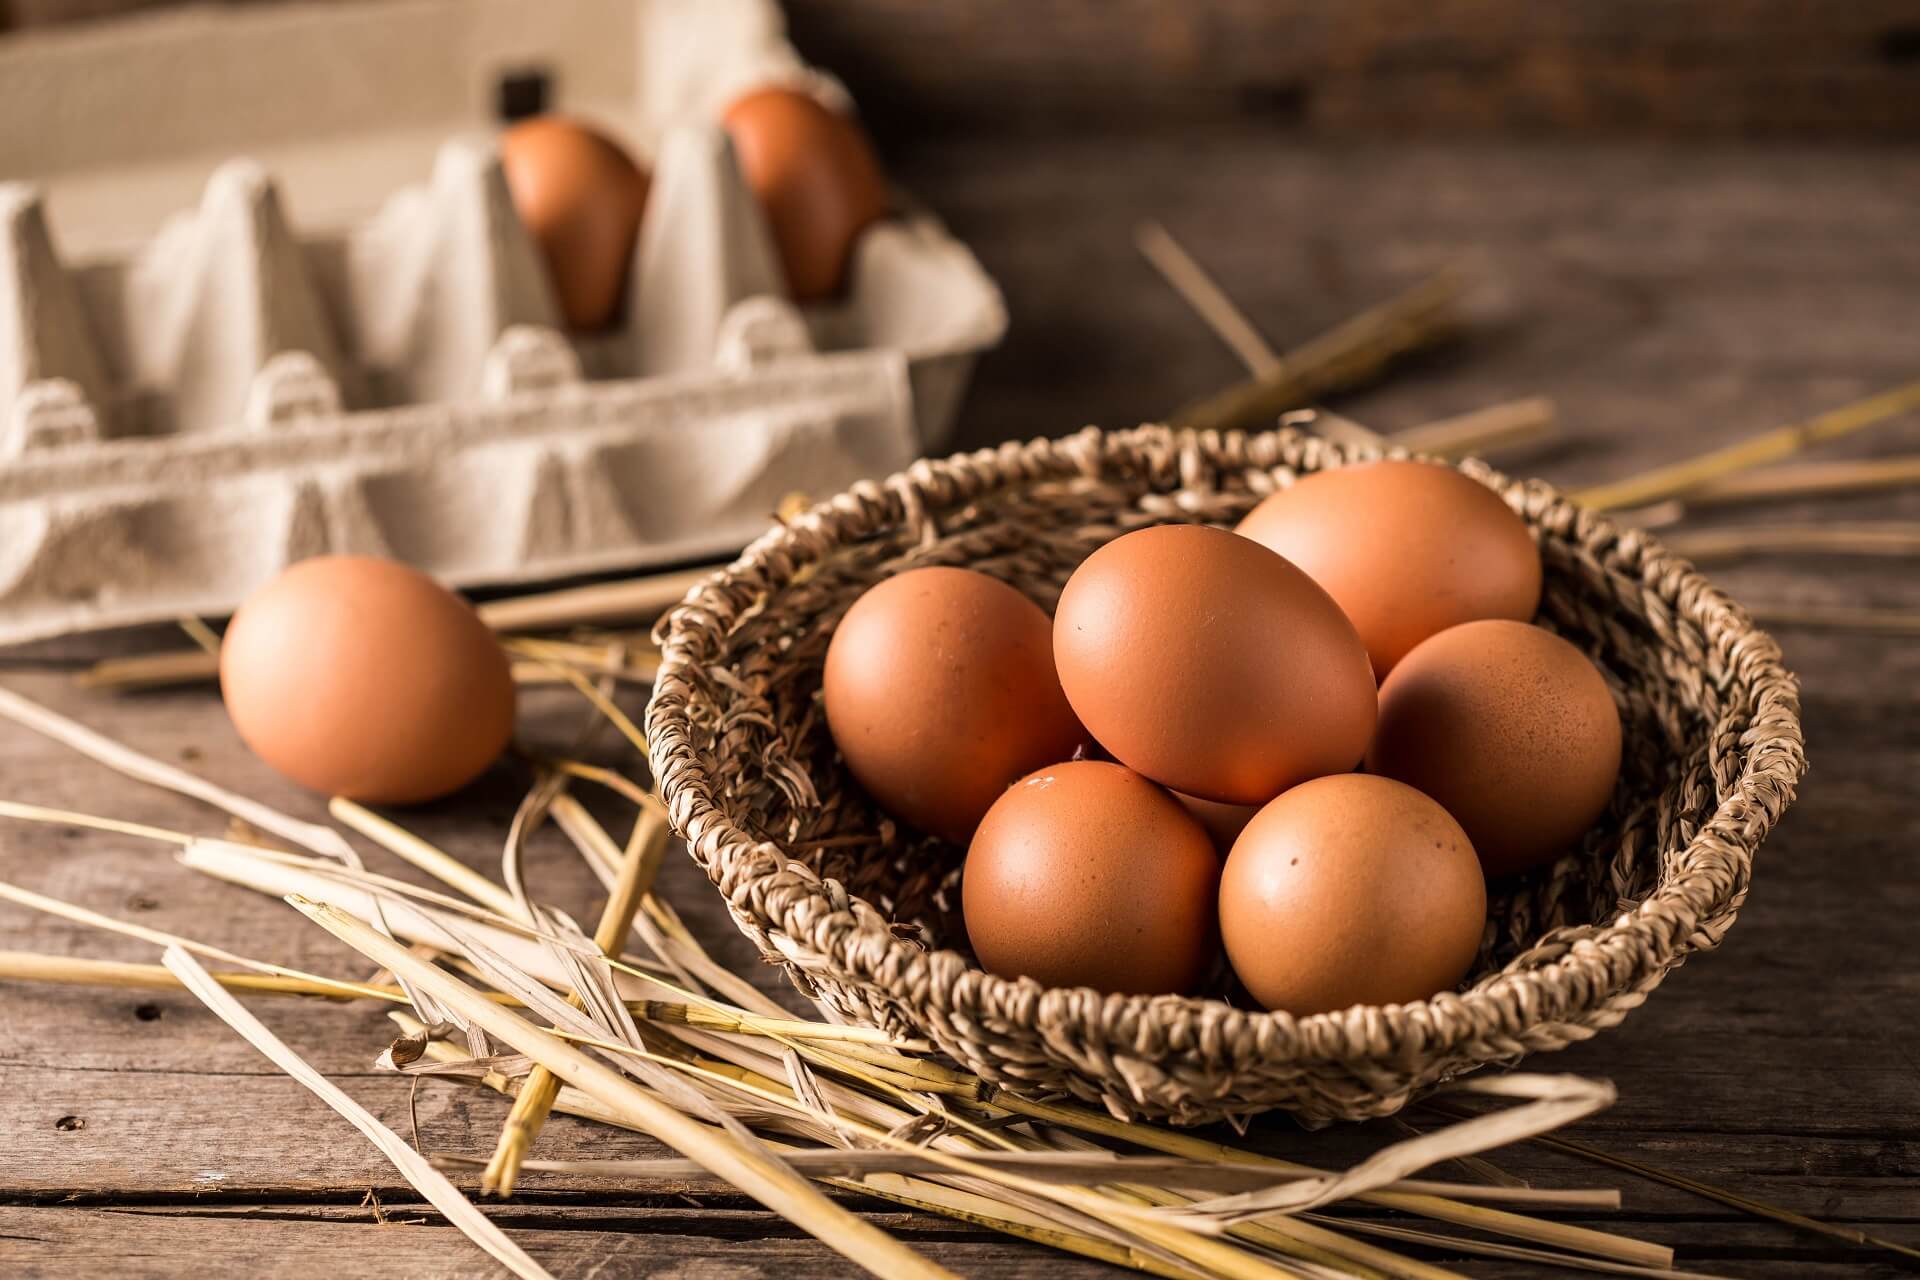 free range eggs - organic eggs